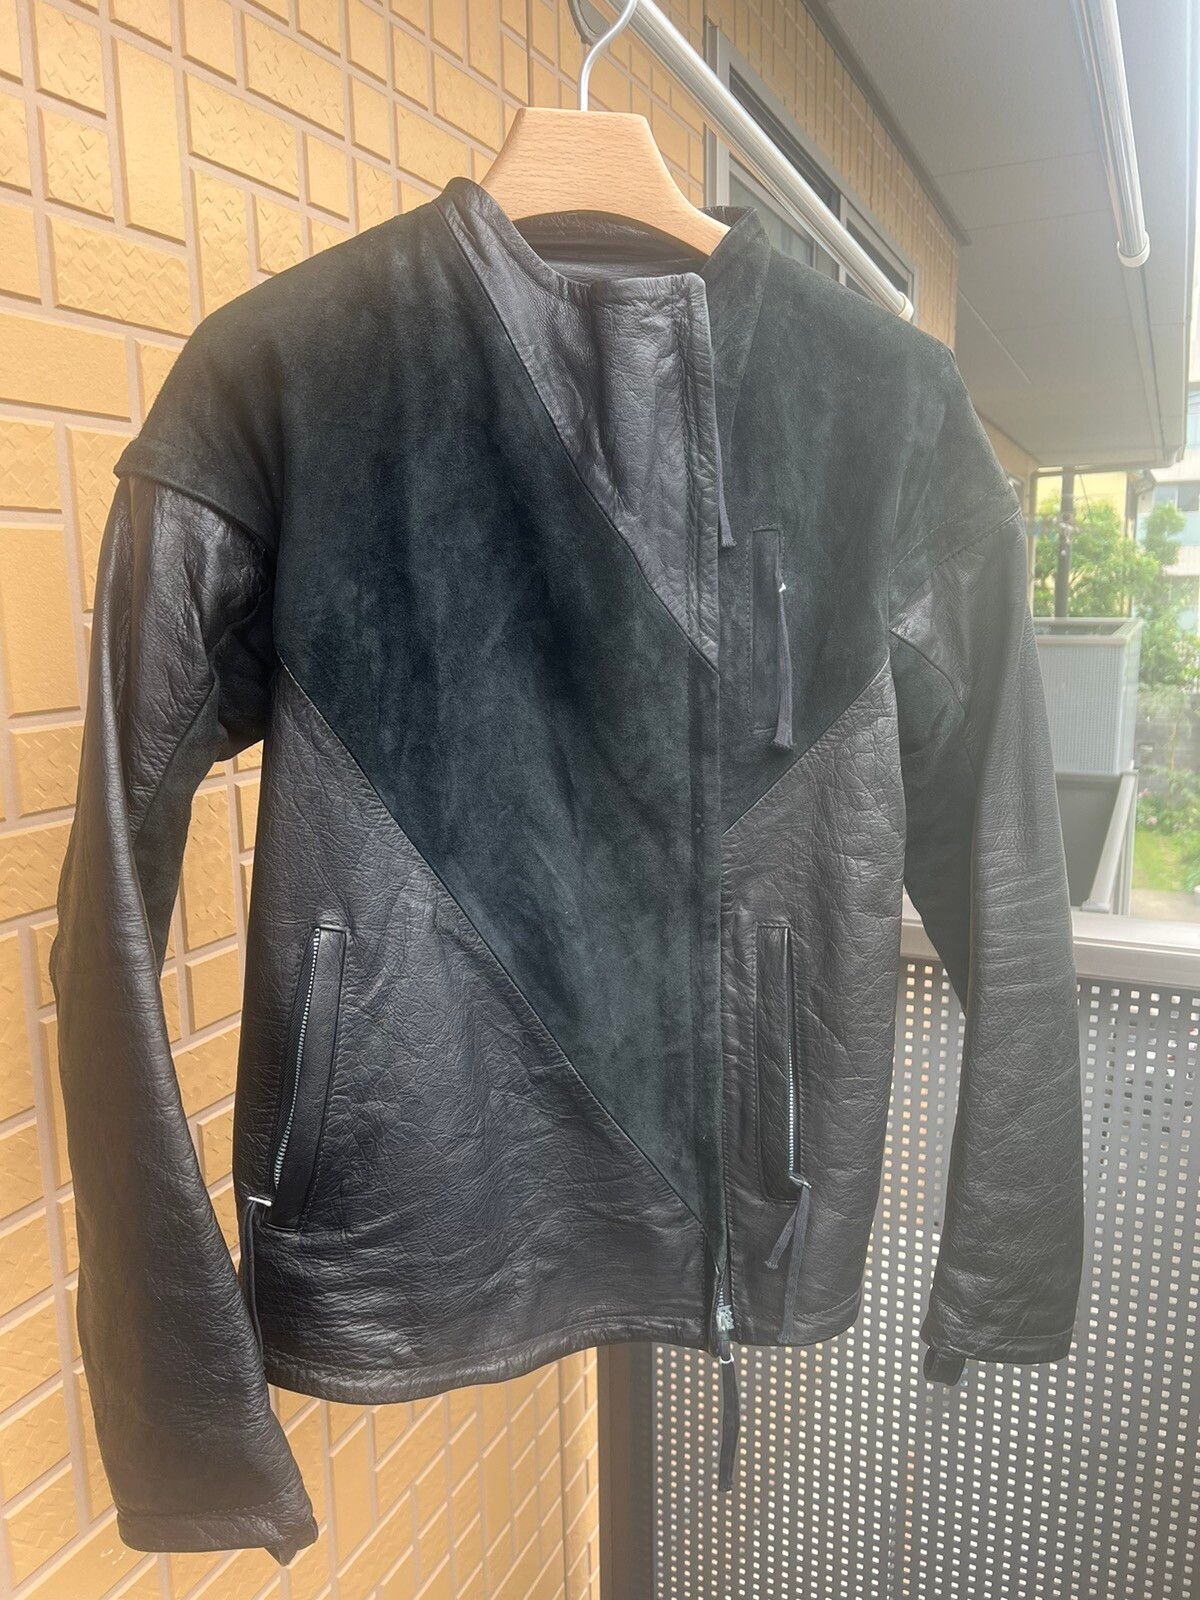 Boris Bidjan Saberi J4 Leather Jacket with detachable sleeves | Grailed